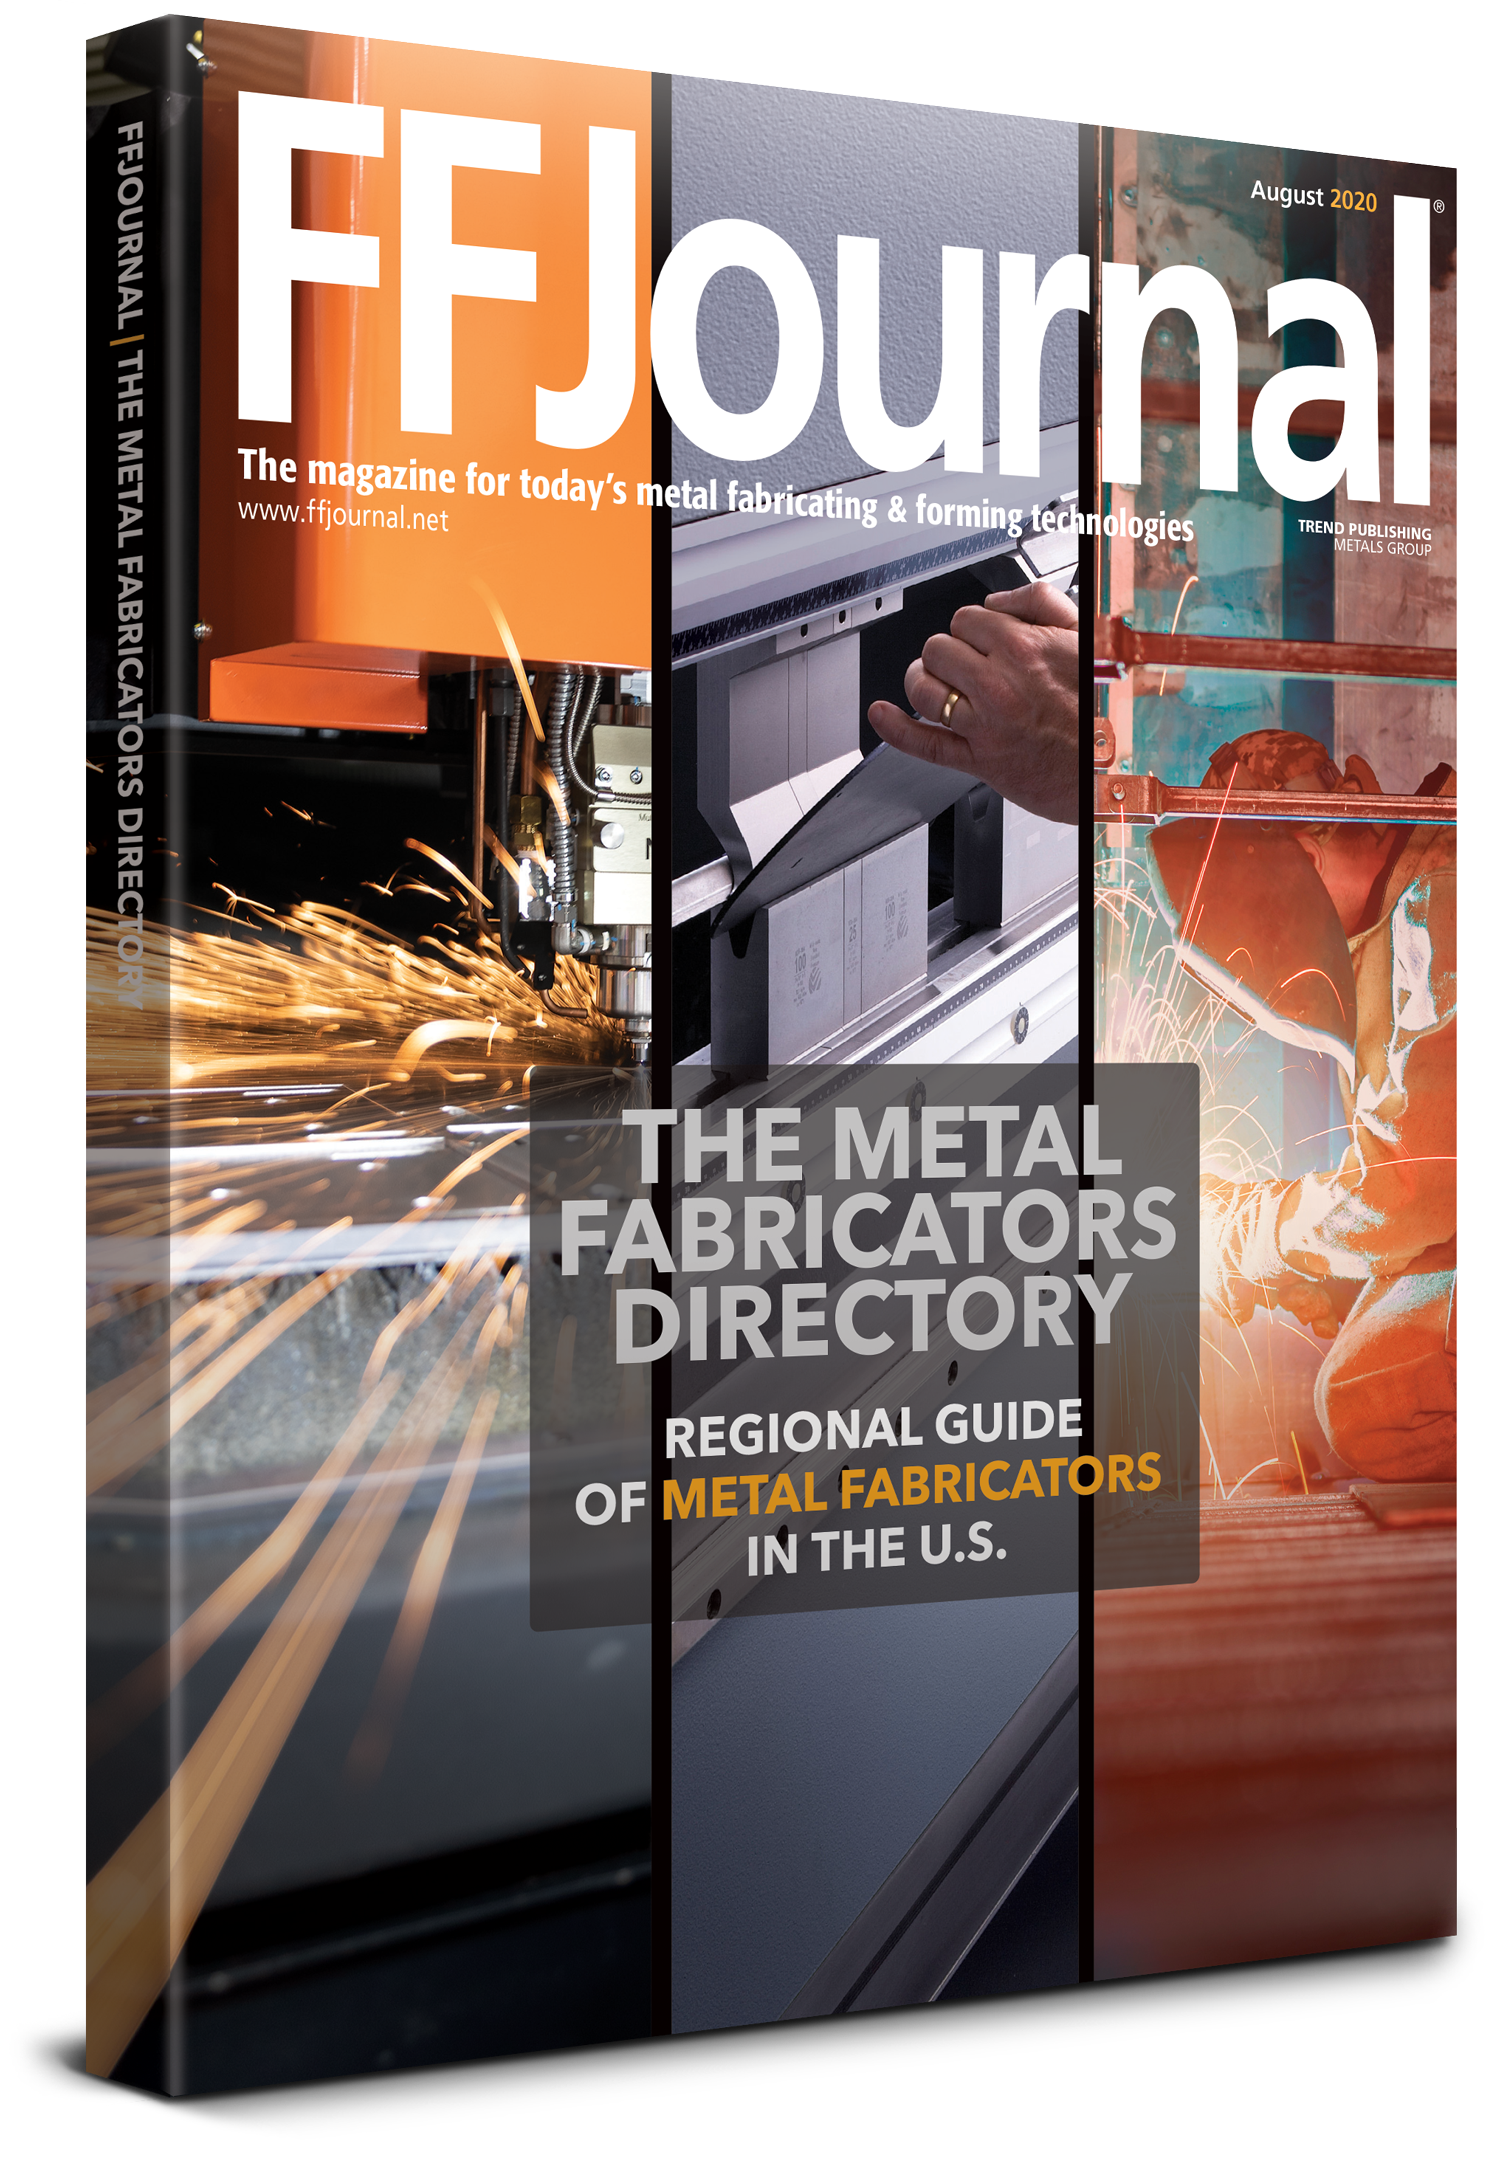 FFJ - The Metal Fabricators Directory